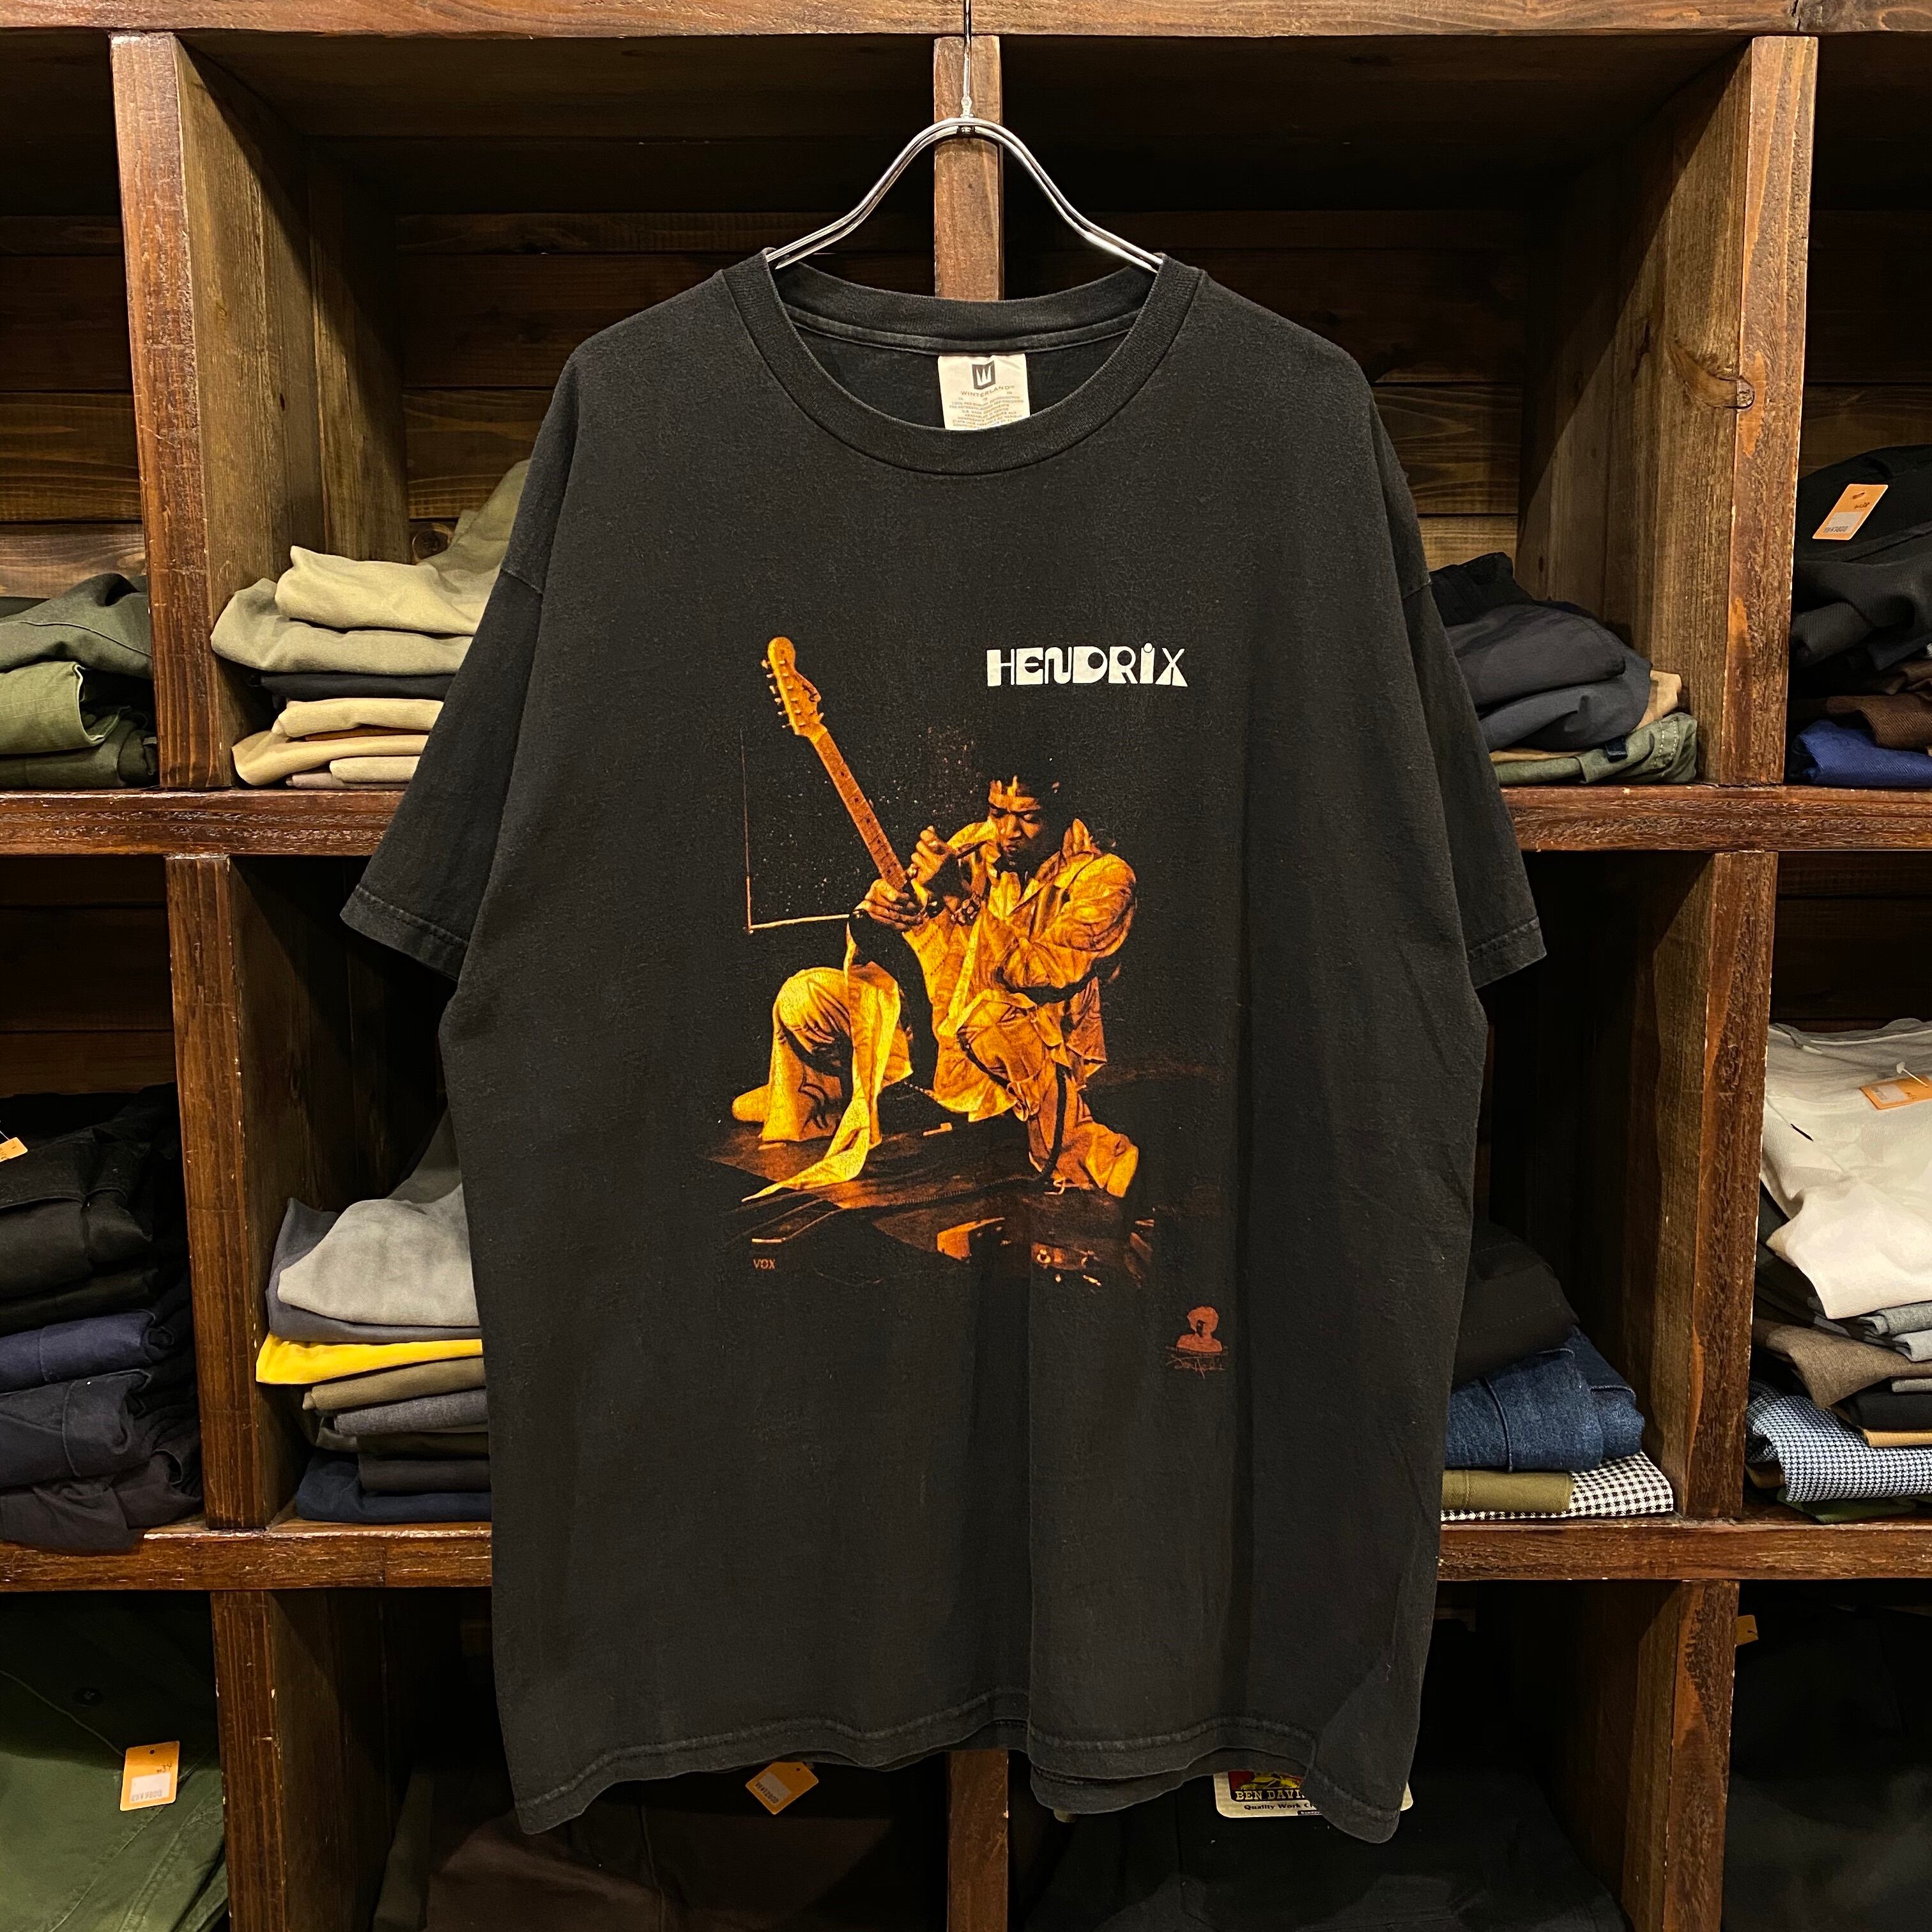 【Vintage】Jimi Hendrix ジミヘン Tシャツ 00s XL